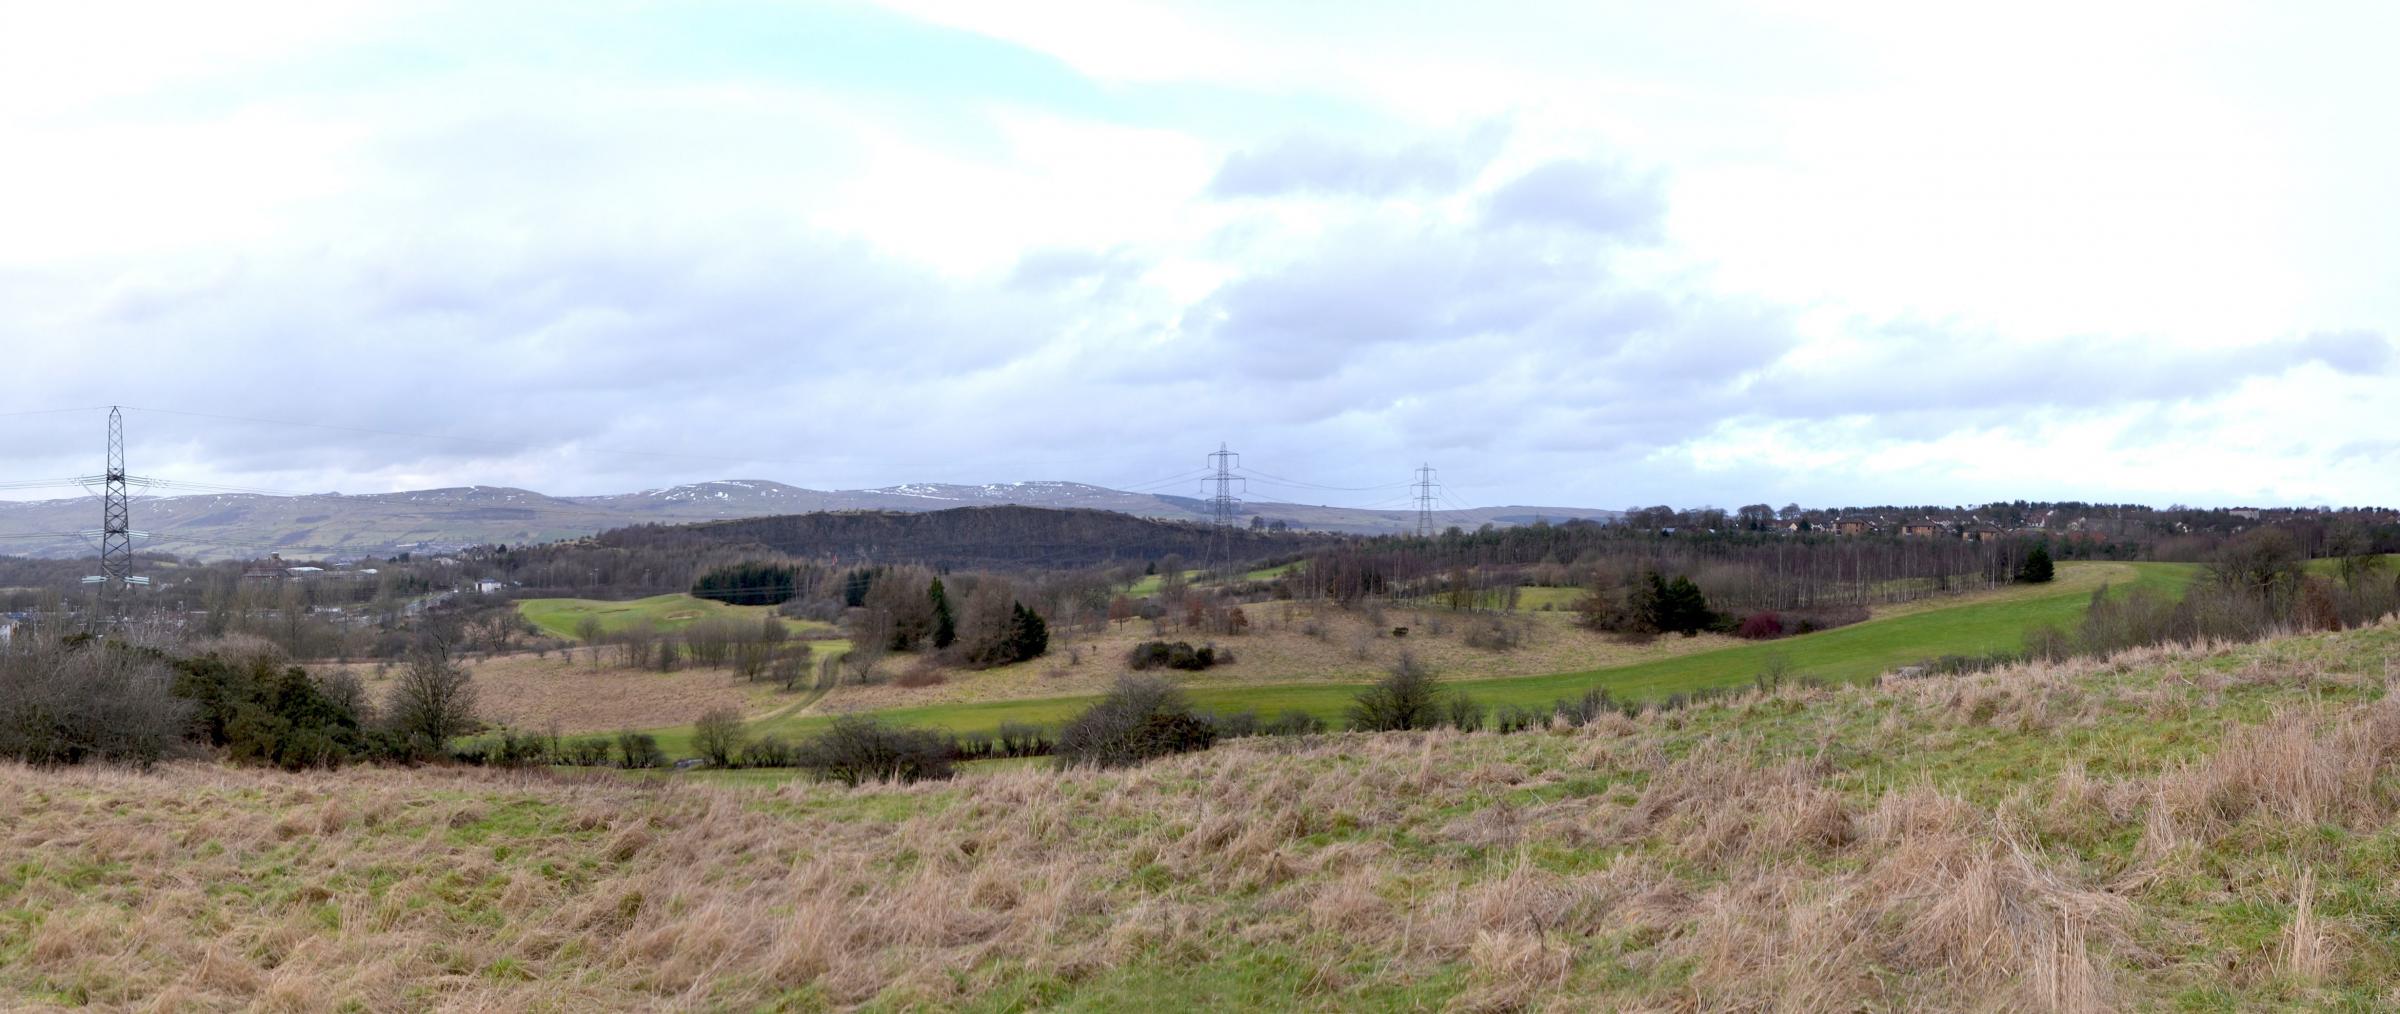 Plans revealed for housing on land at Scottish golf club